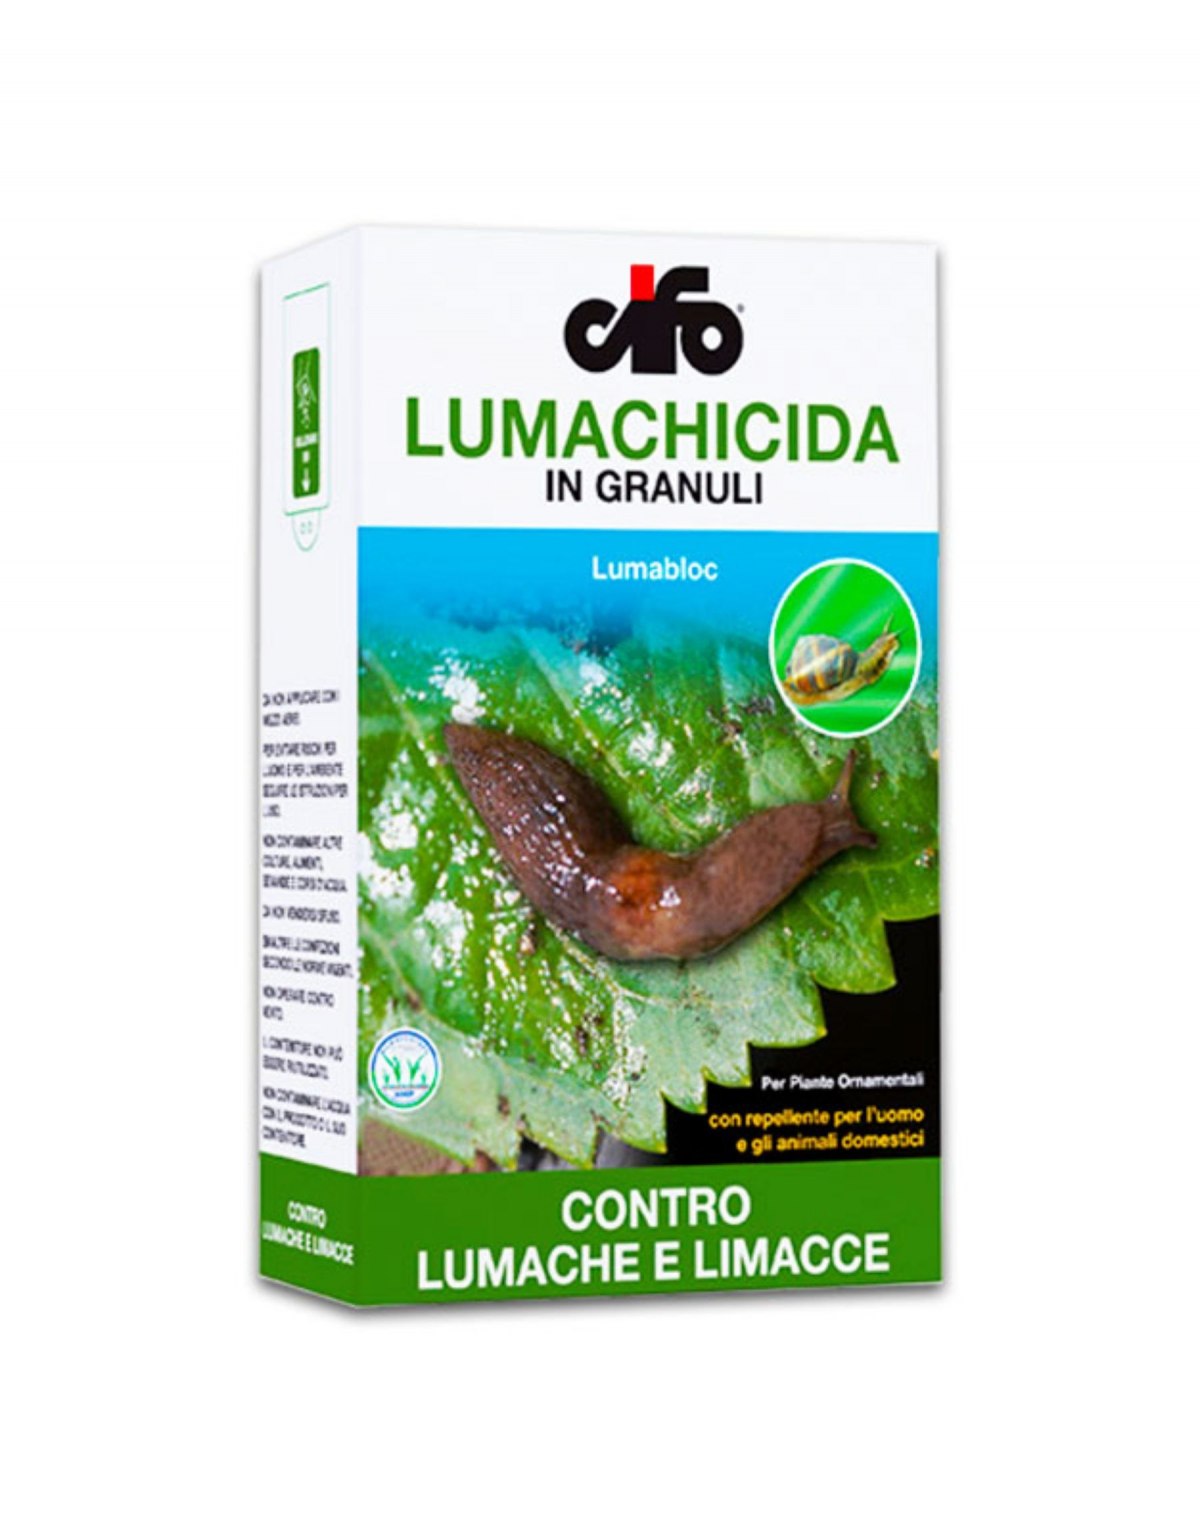 Lumachicida in granuli - Cifo